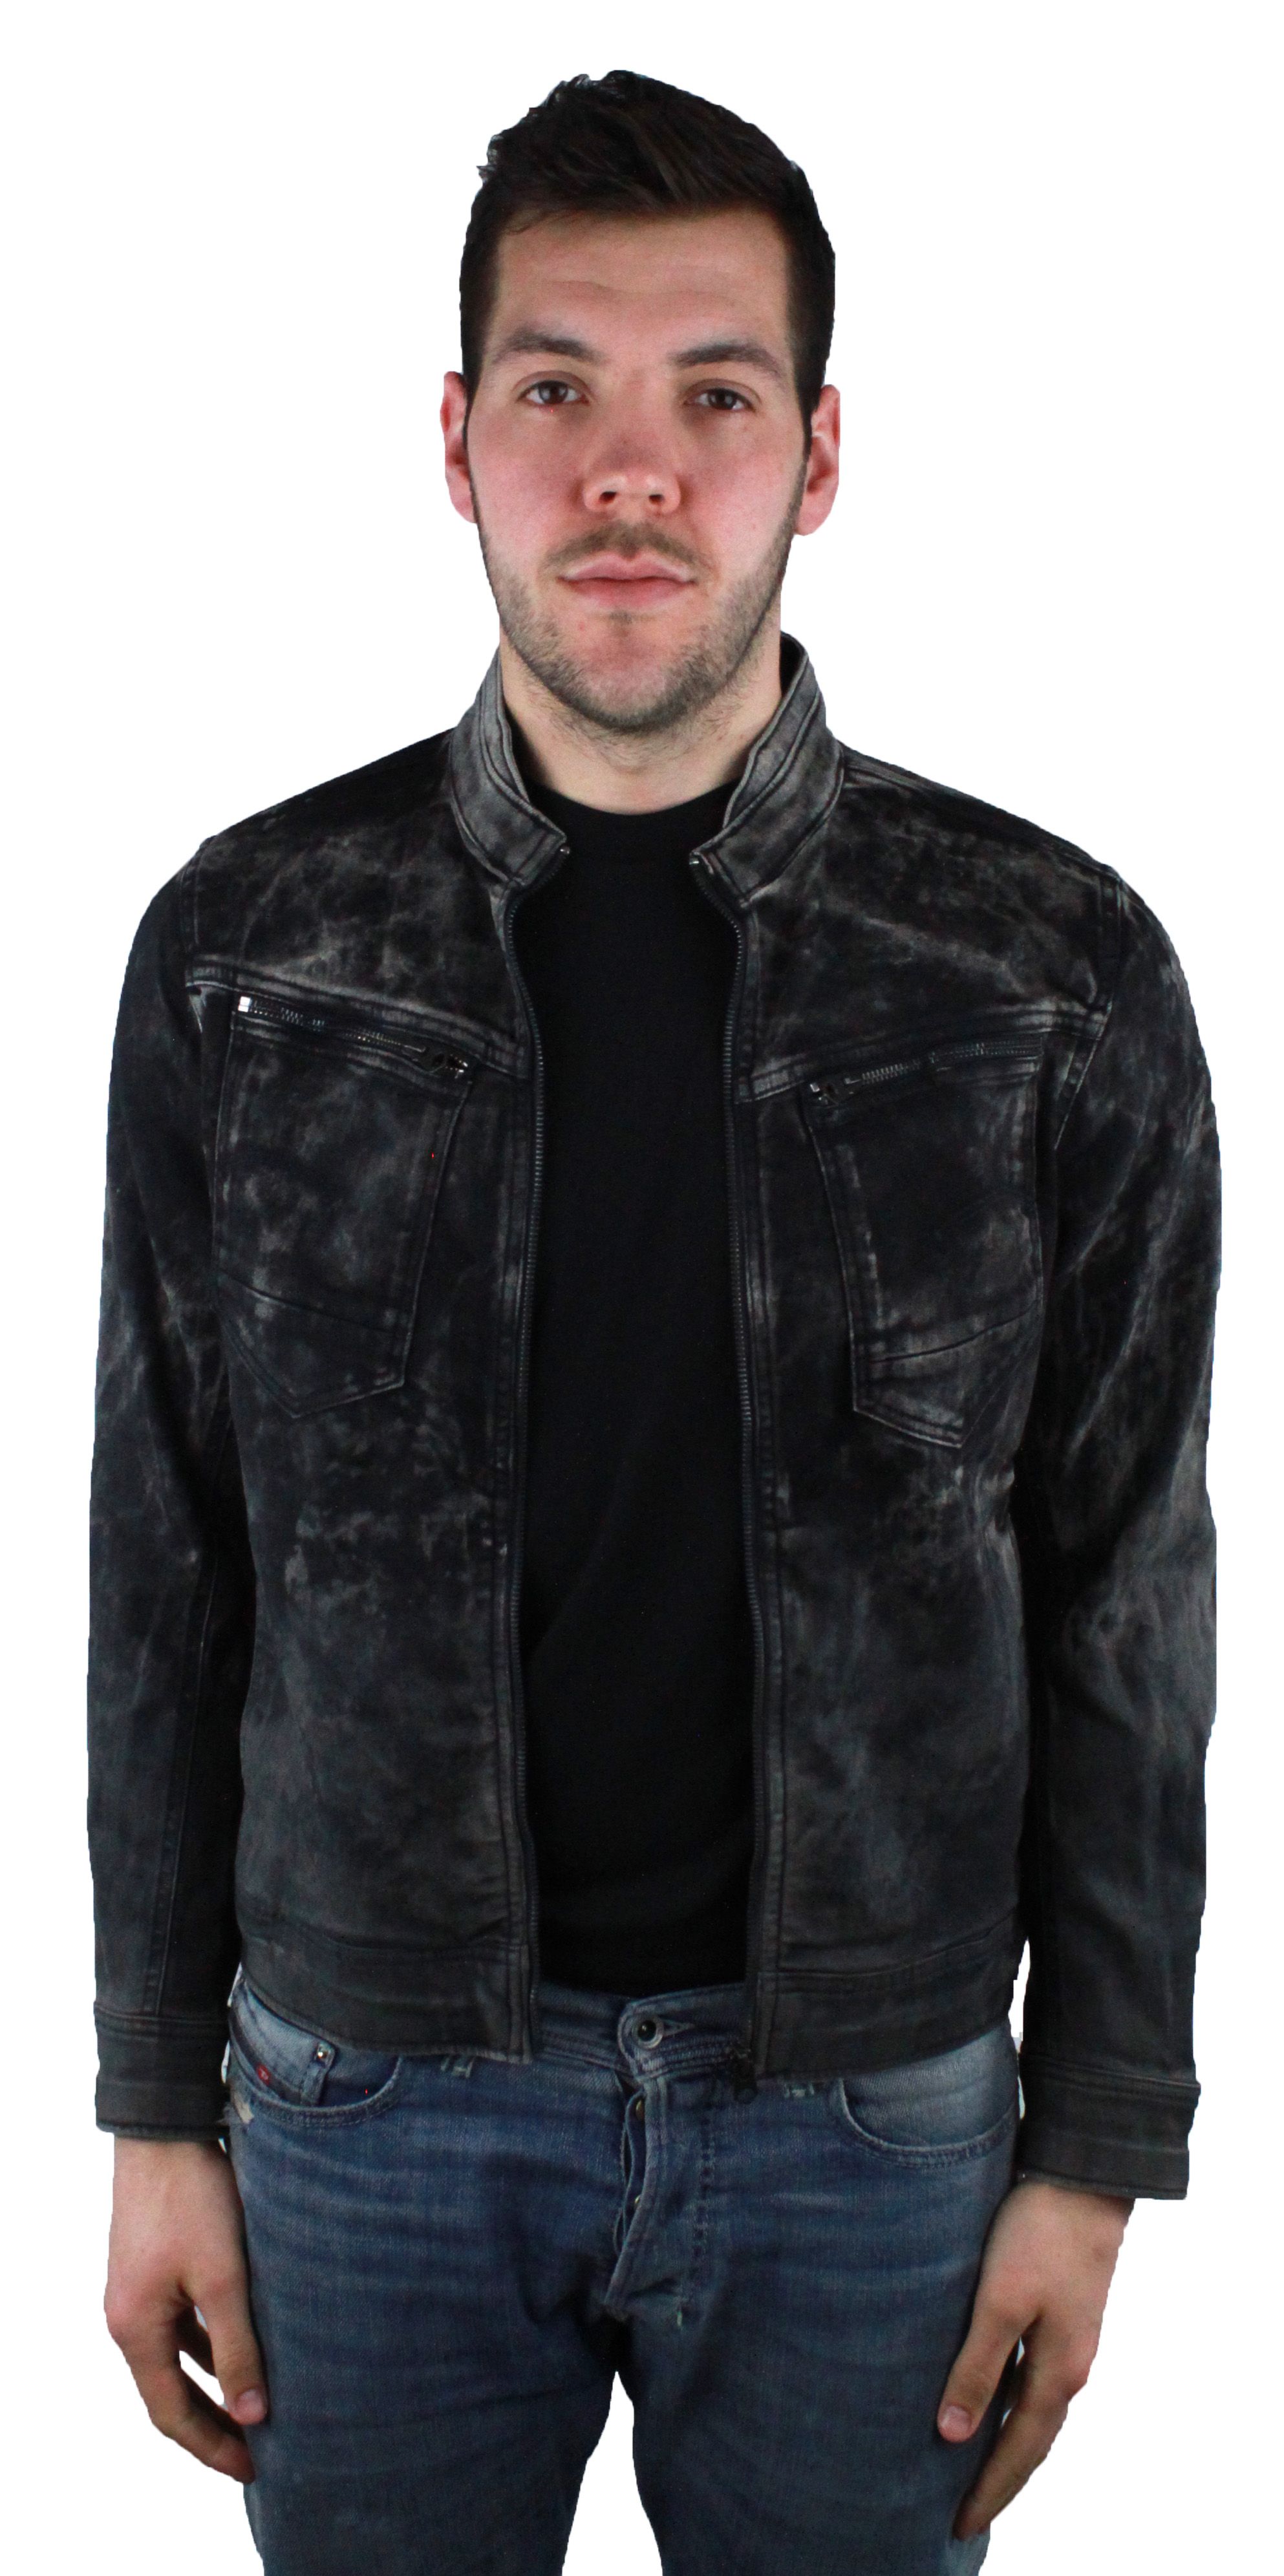 G-Star Raw Arc Zip Deconstructed Vintaged Aged Cobler Jacket. G-Star Slim Black Denim Jacket. Chinese Collar with Central Zip Opening. D02035.6009.7090. 35% Cotton, 35% Lyocell, 28% Polyester, 2% Elastane. Stretch Denim